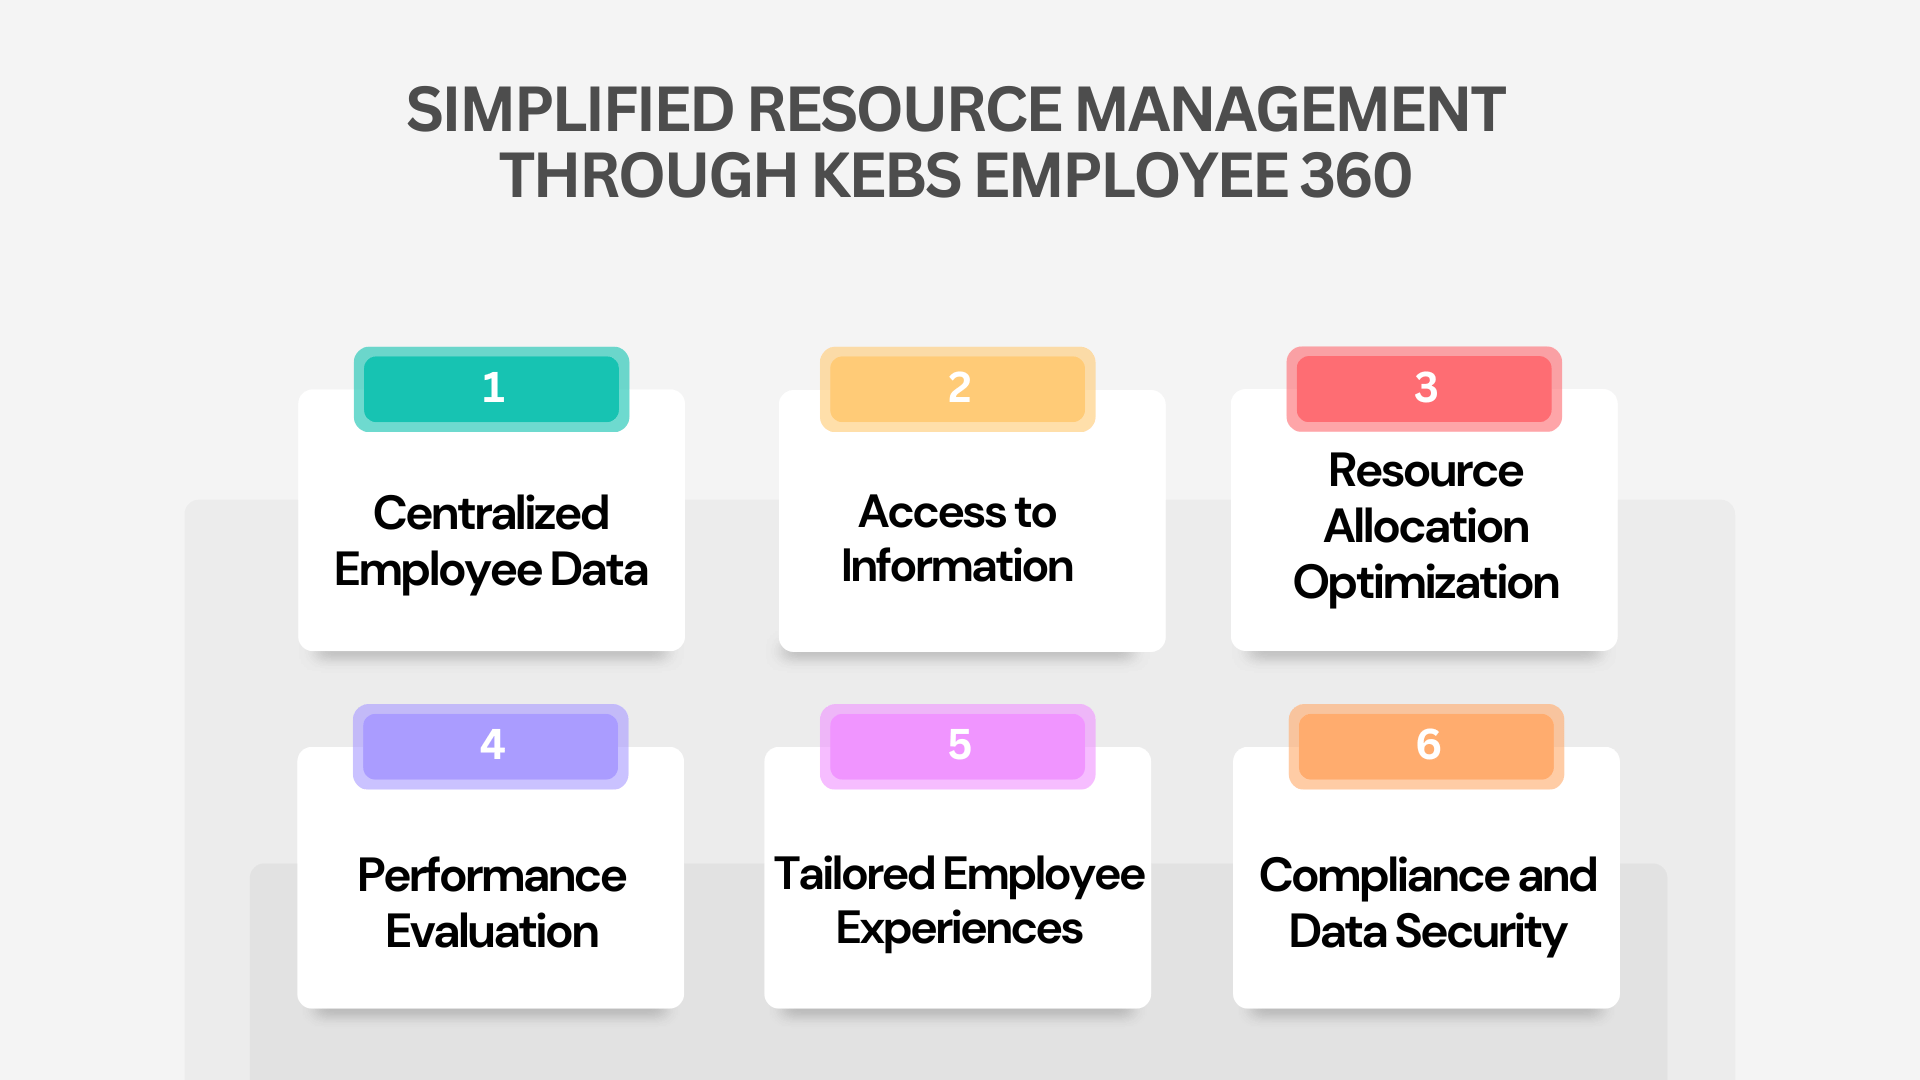 Simplified Resource Management through KEBS Employee 360